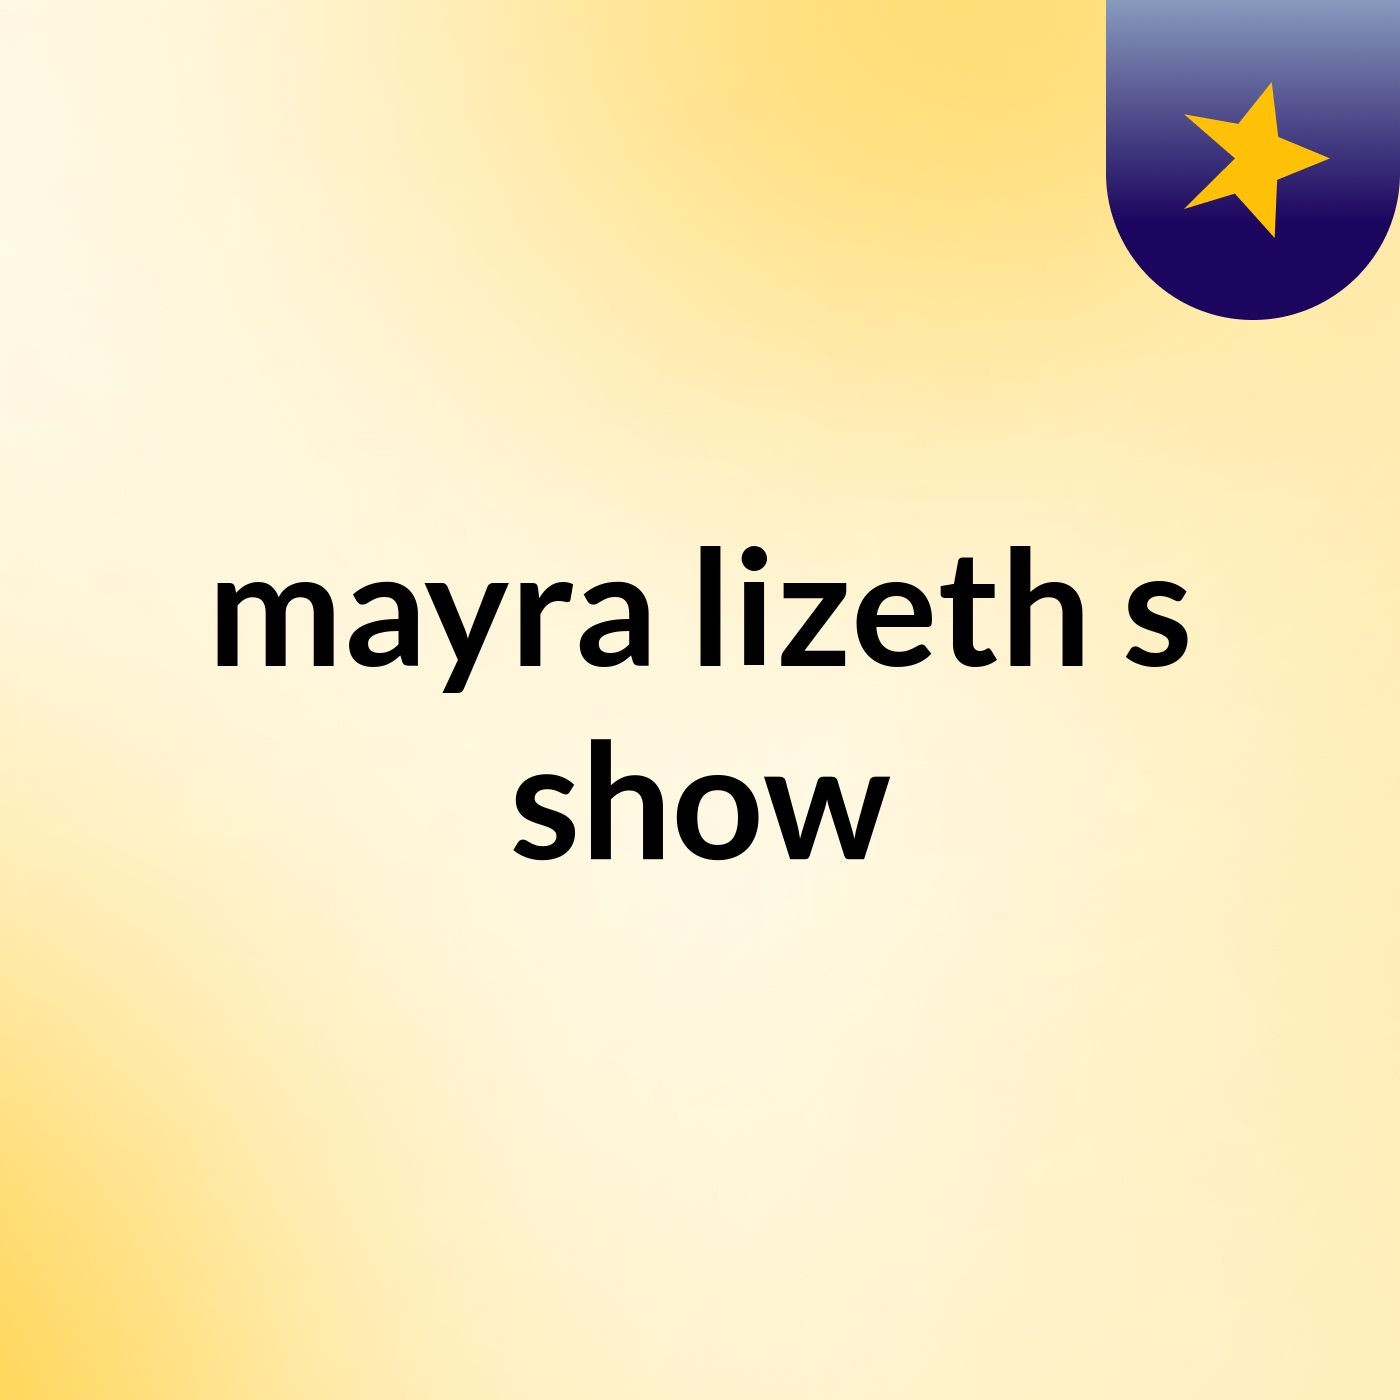 mayra lizeth's show